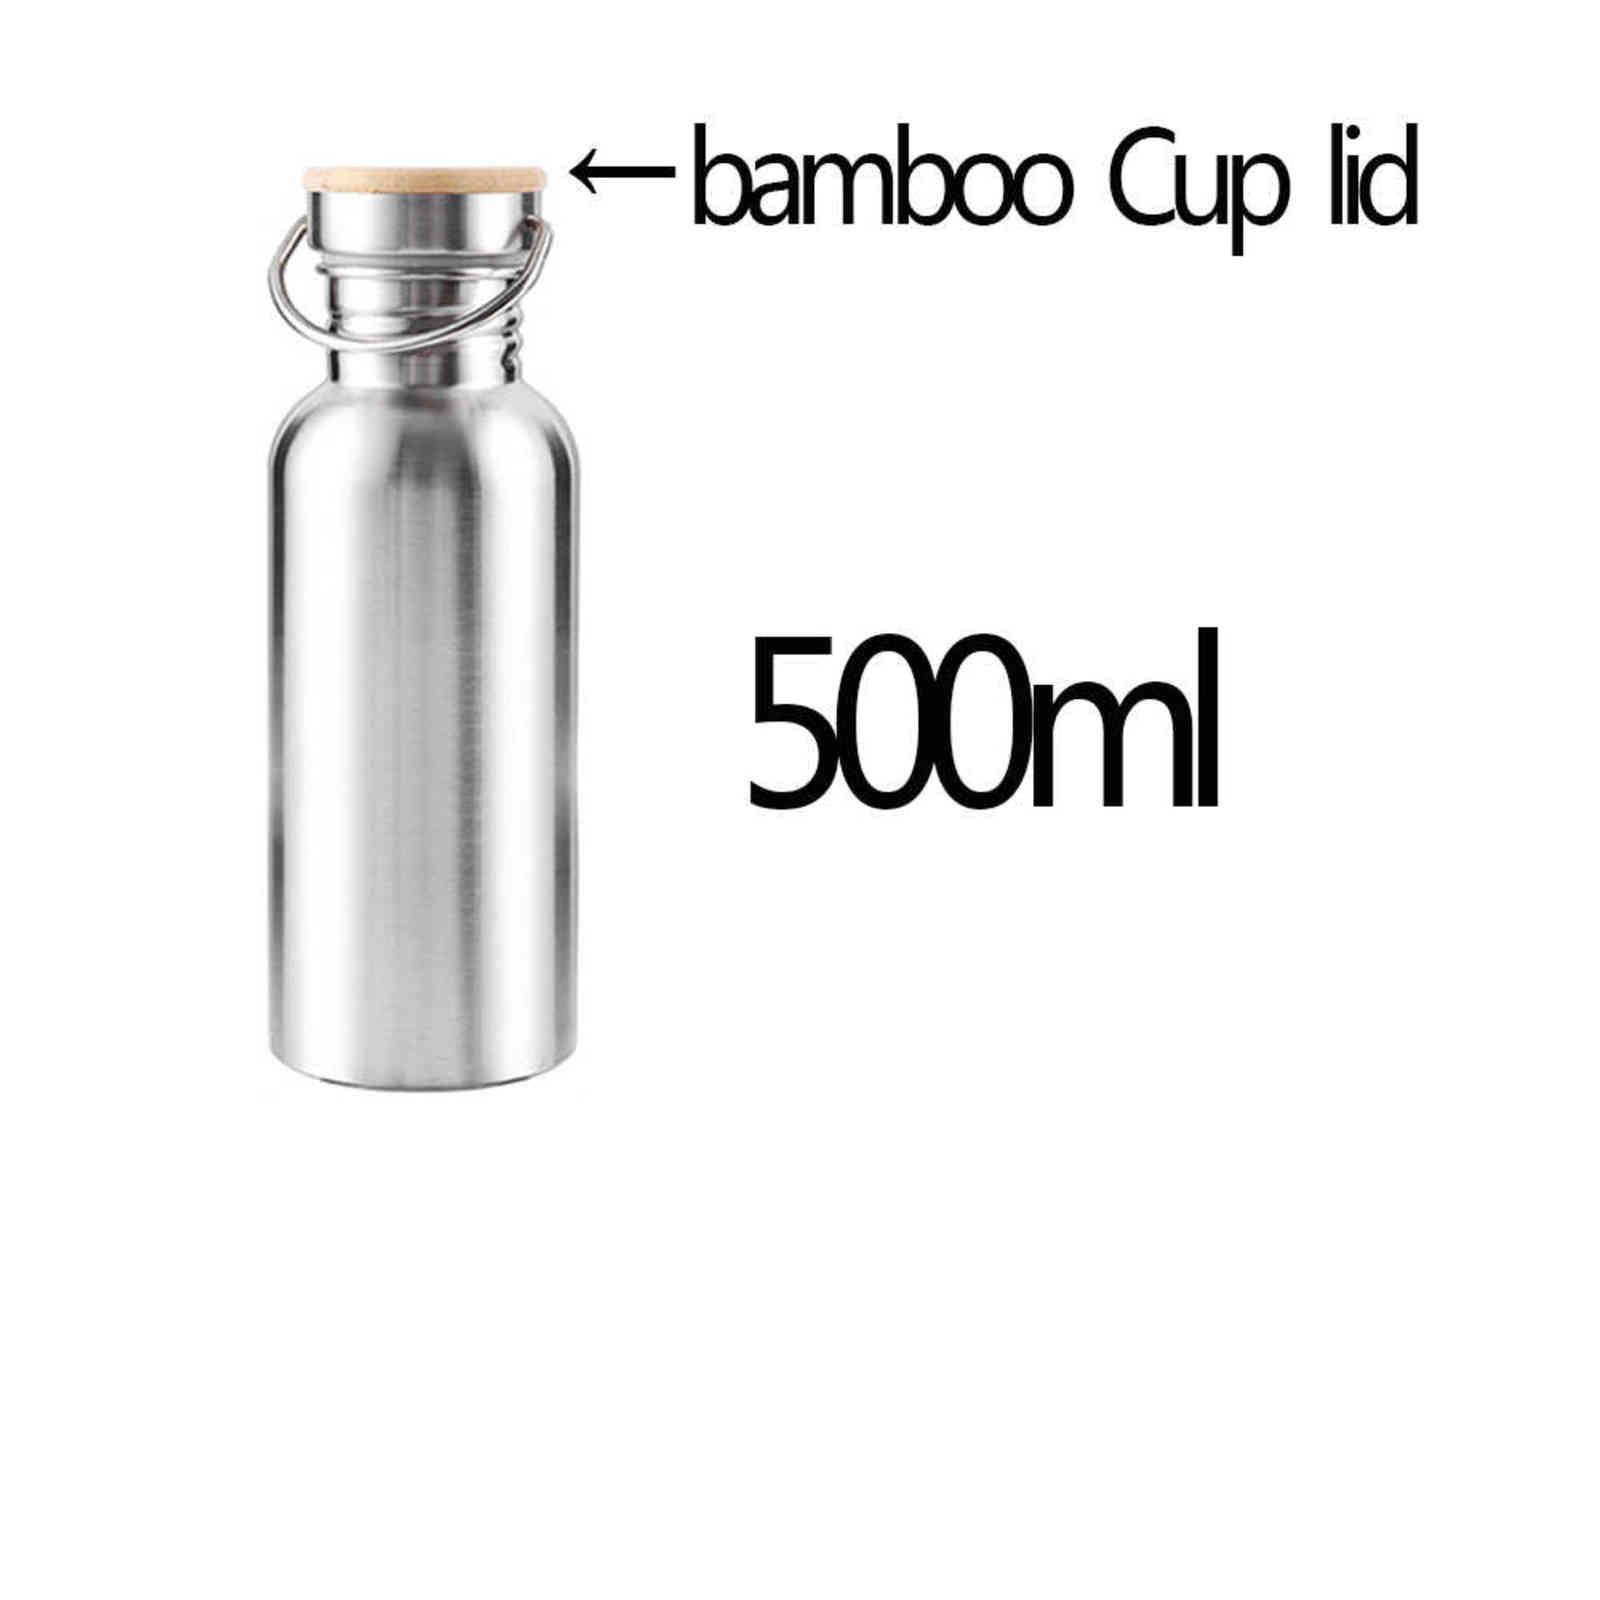 500 ml bambulock